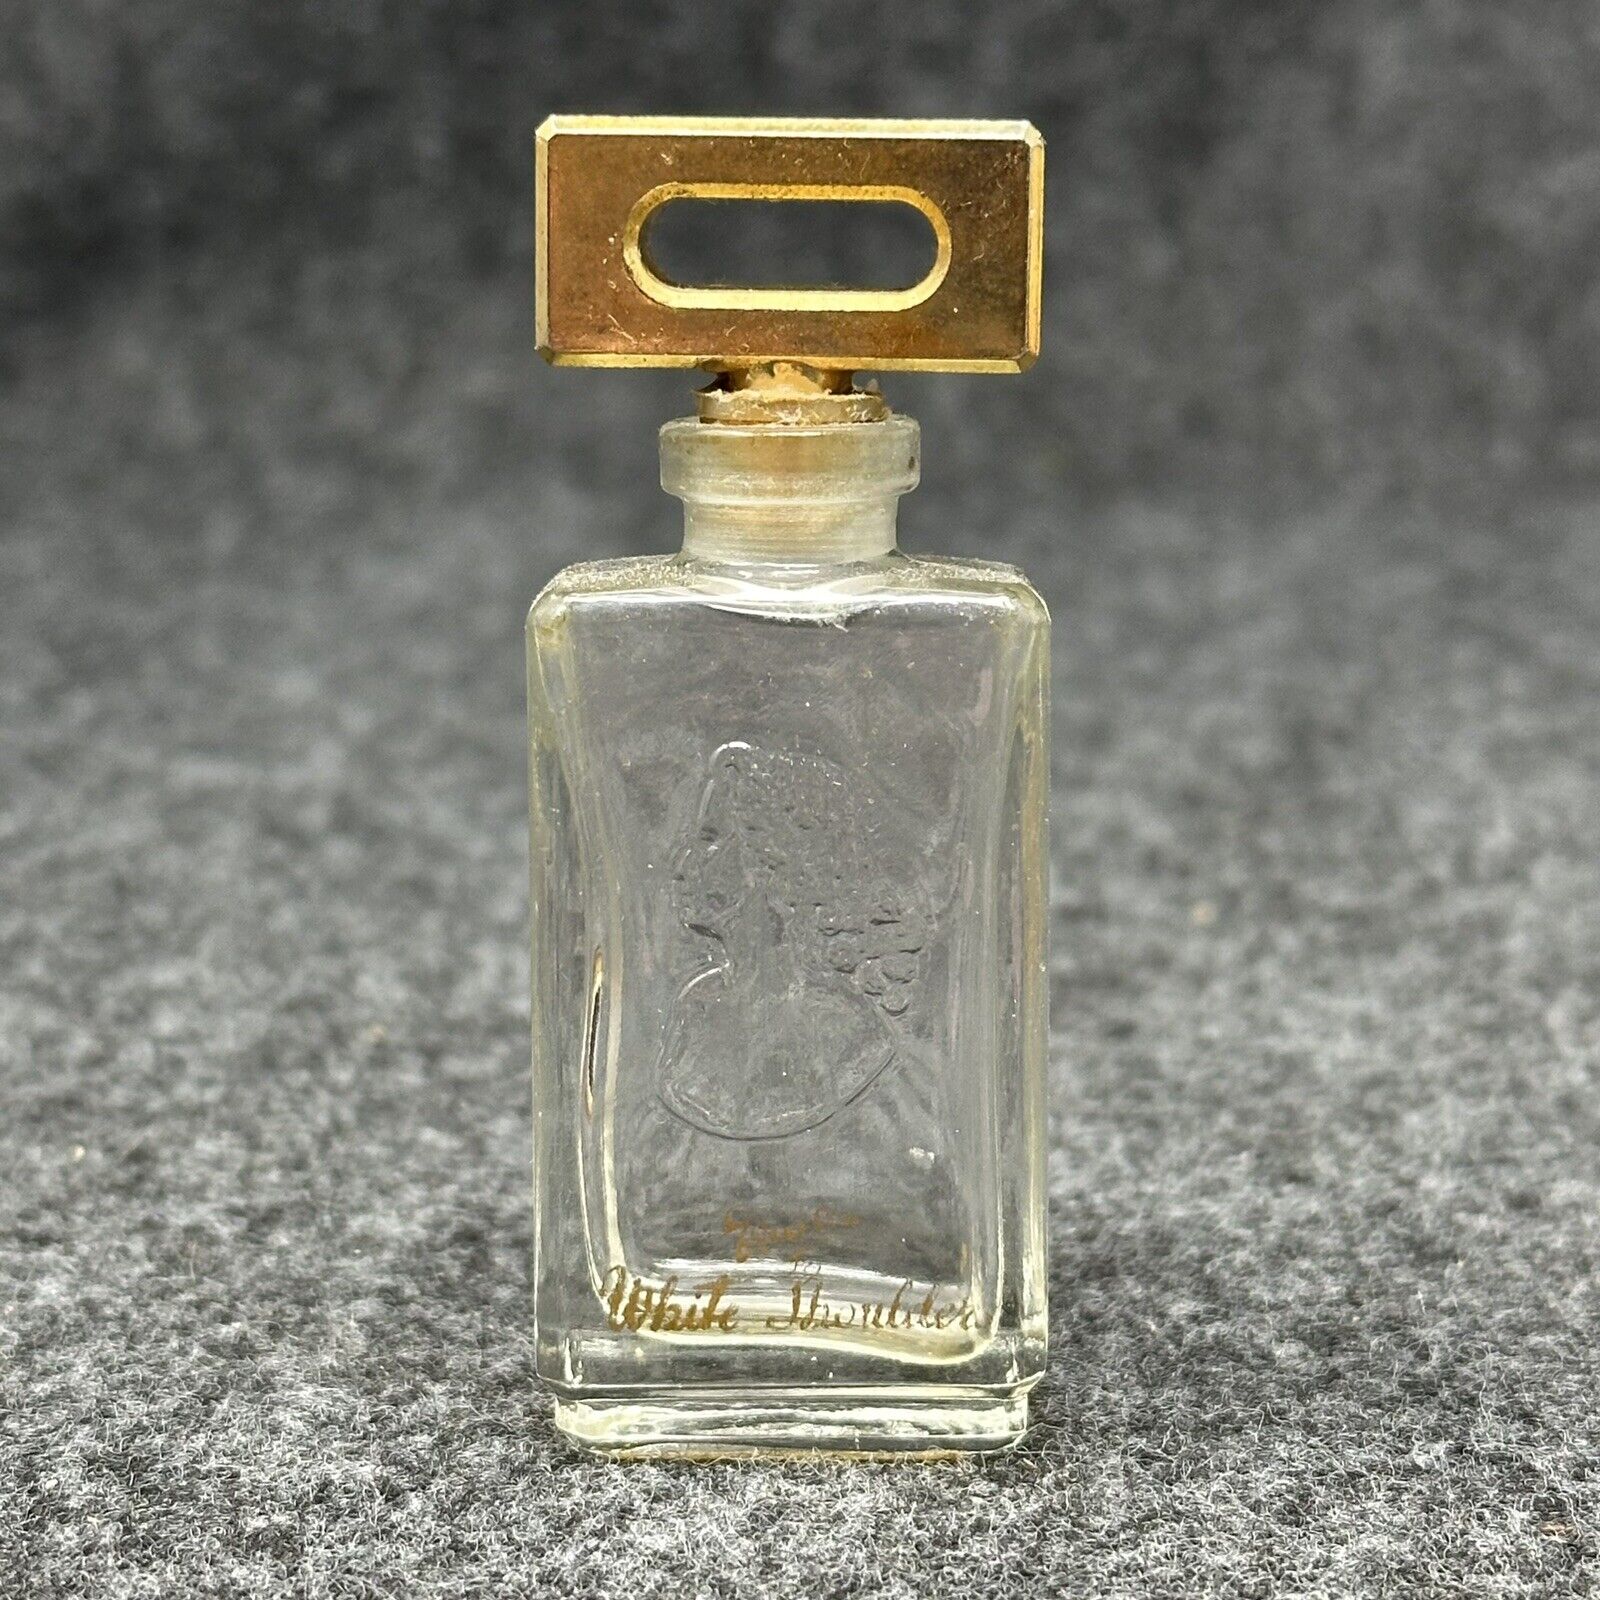 Evyan White Shoulders Vintage Perfume Bottle Sample Mini Vanity Decor Gold Top